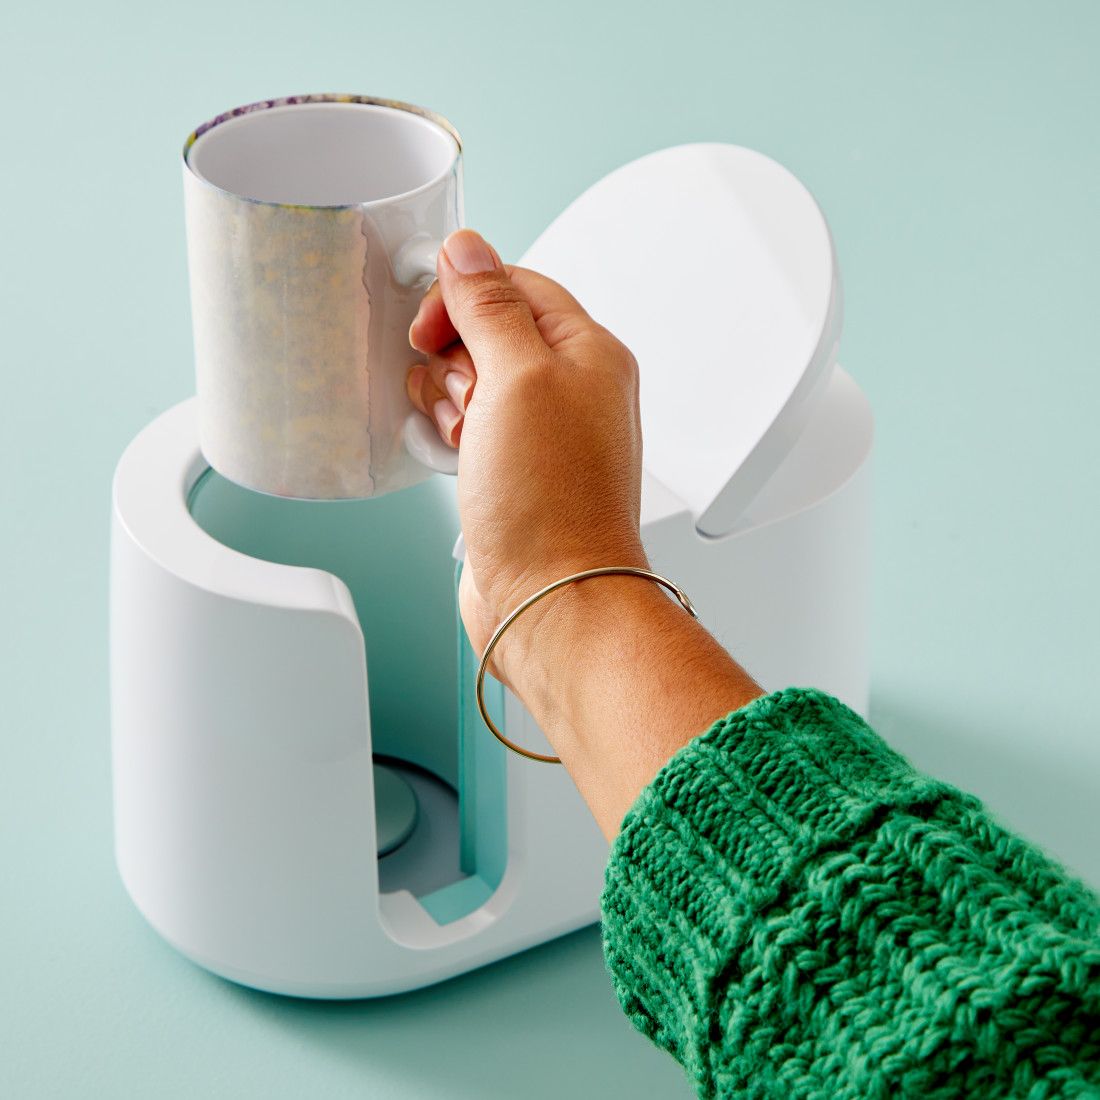 New Cricut Mug Press – Craft Box Girls